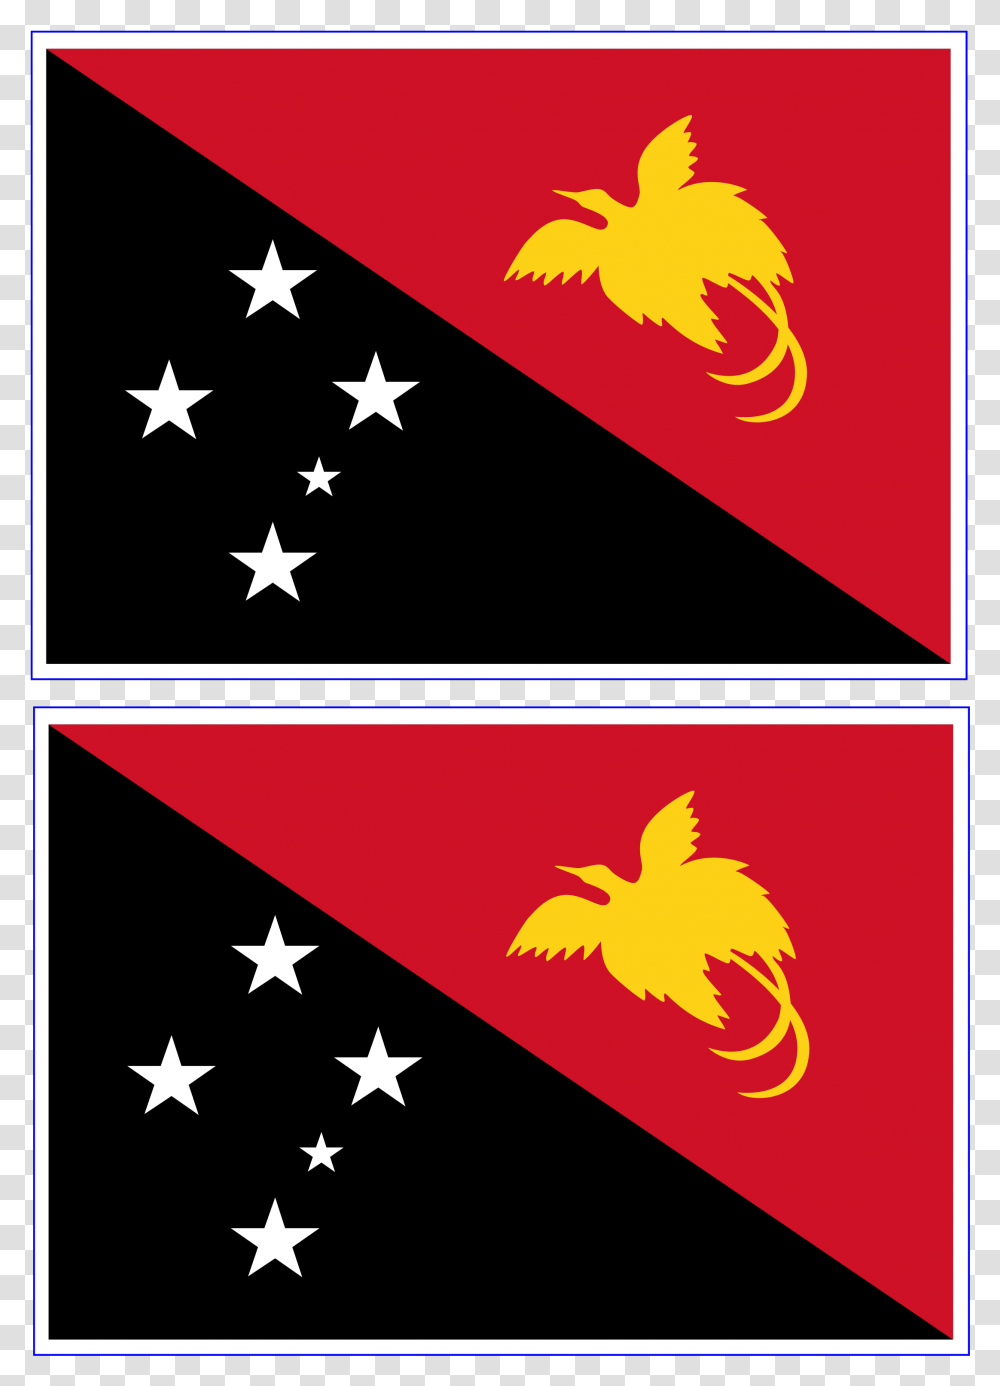 Papua New Guinea Flag Main Image Papua New Guinea Flag, Star Symbol, Poster, Advertisement Transparent Png